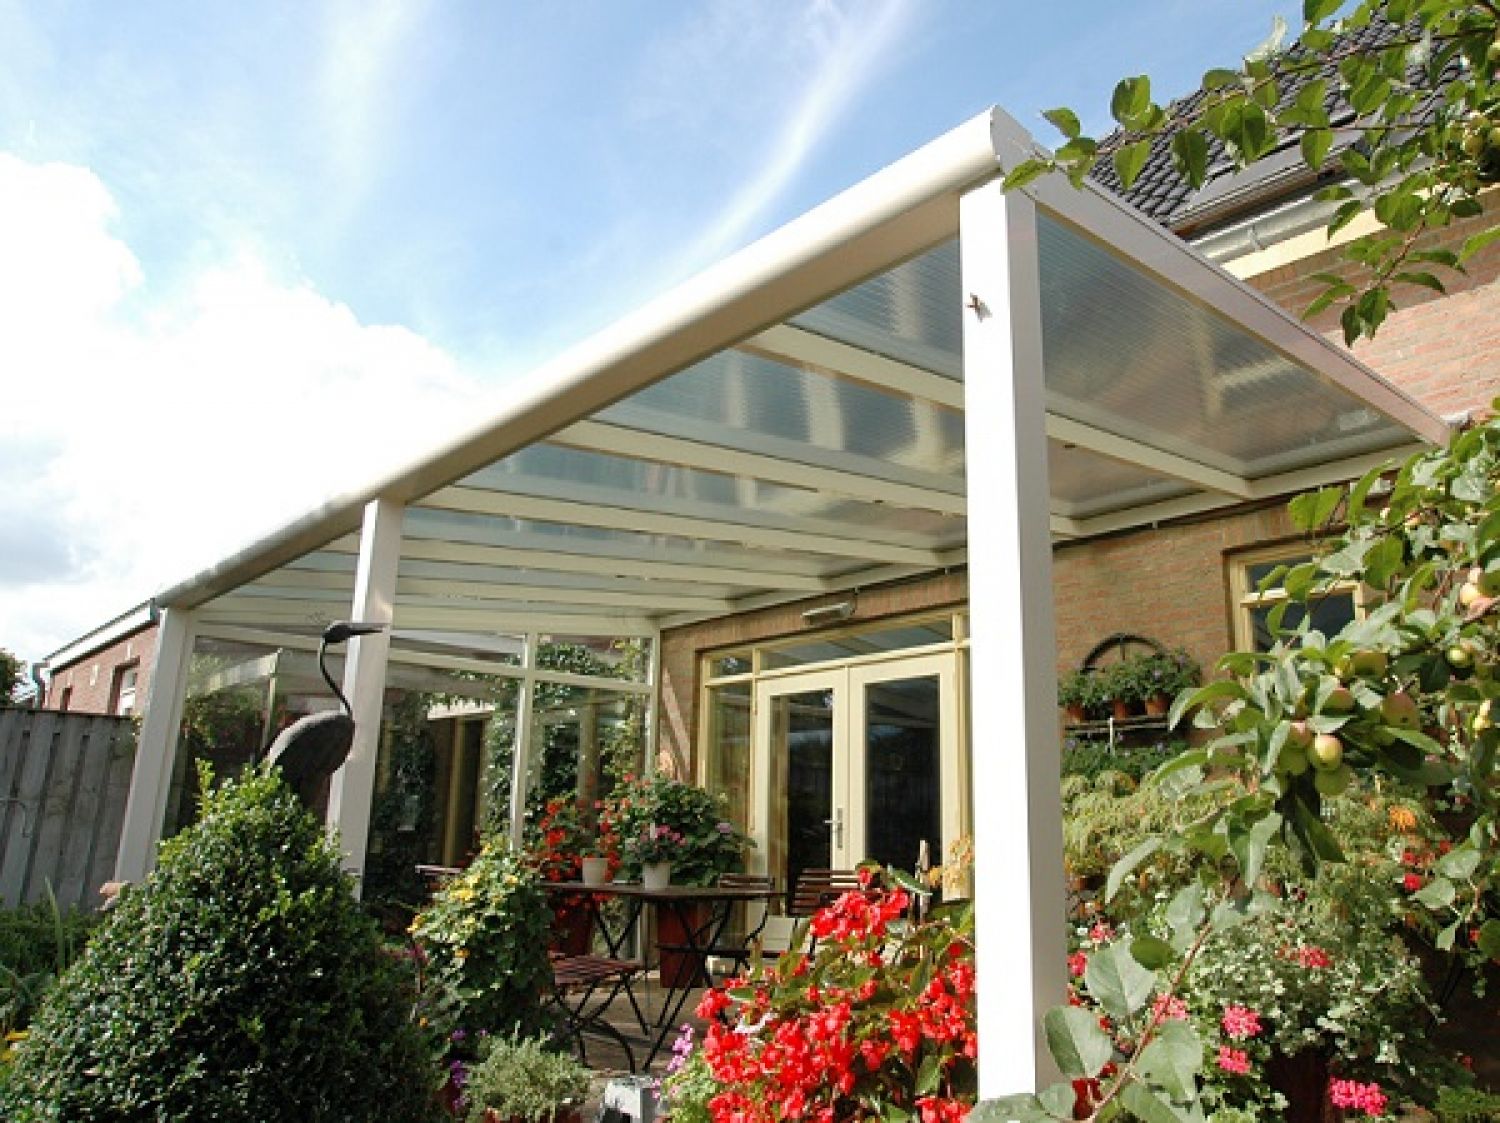 Profiline veranda 600x300 cm - polycarbonaat dak